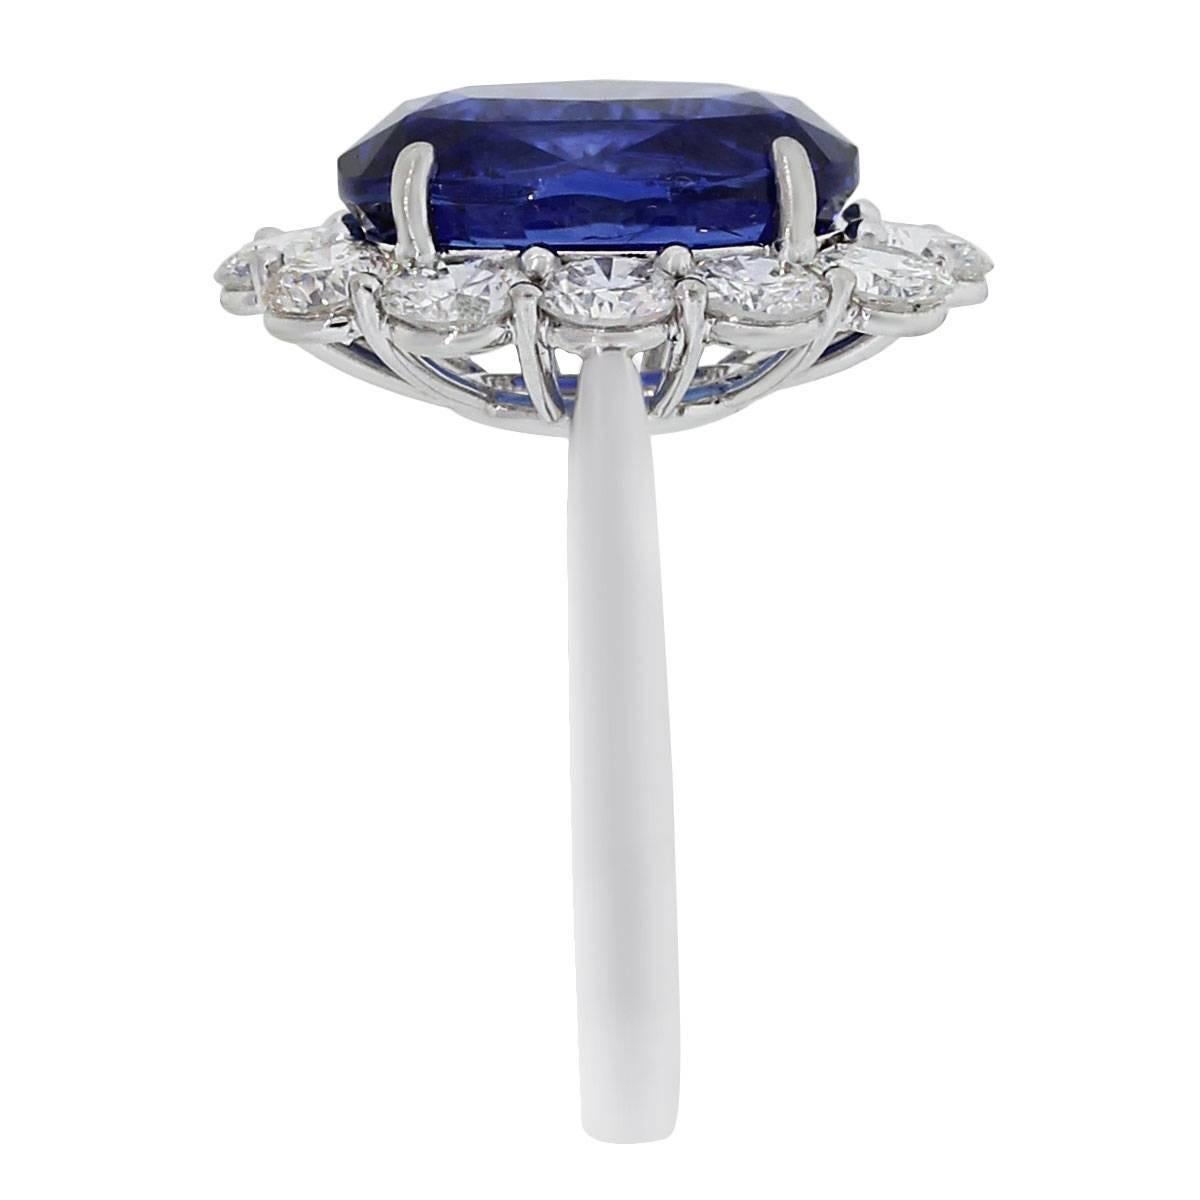 Style: Platinum Round Brilliant Diamond Sapphire Ring
Material: Platinum
Diamond Details: Approximately 1.88ctw Round Brilliant Diamonds. Diamonds are F/G in color and VS in clarity
Gemstone Details: Approximately 7.02ct of Blue oval Sapphire